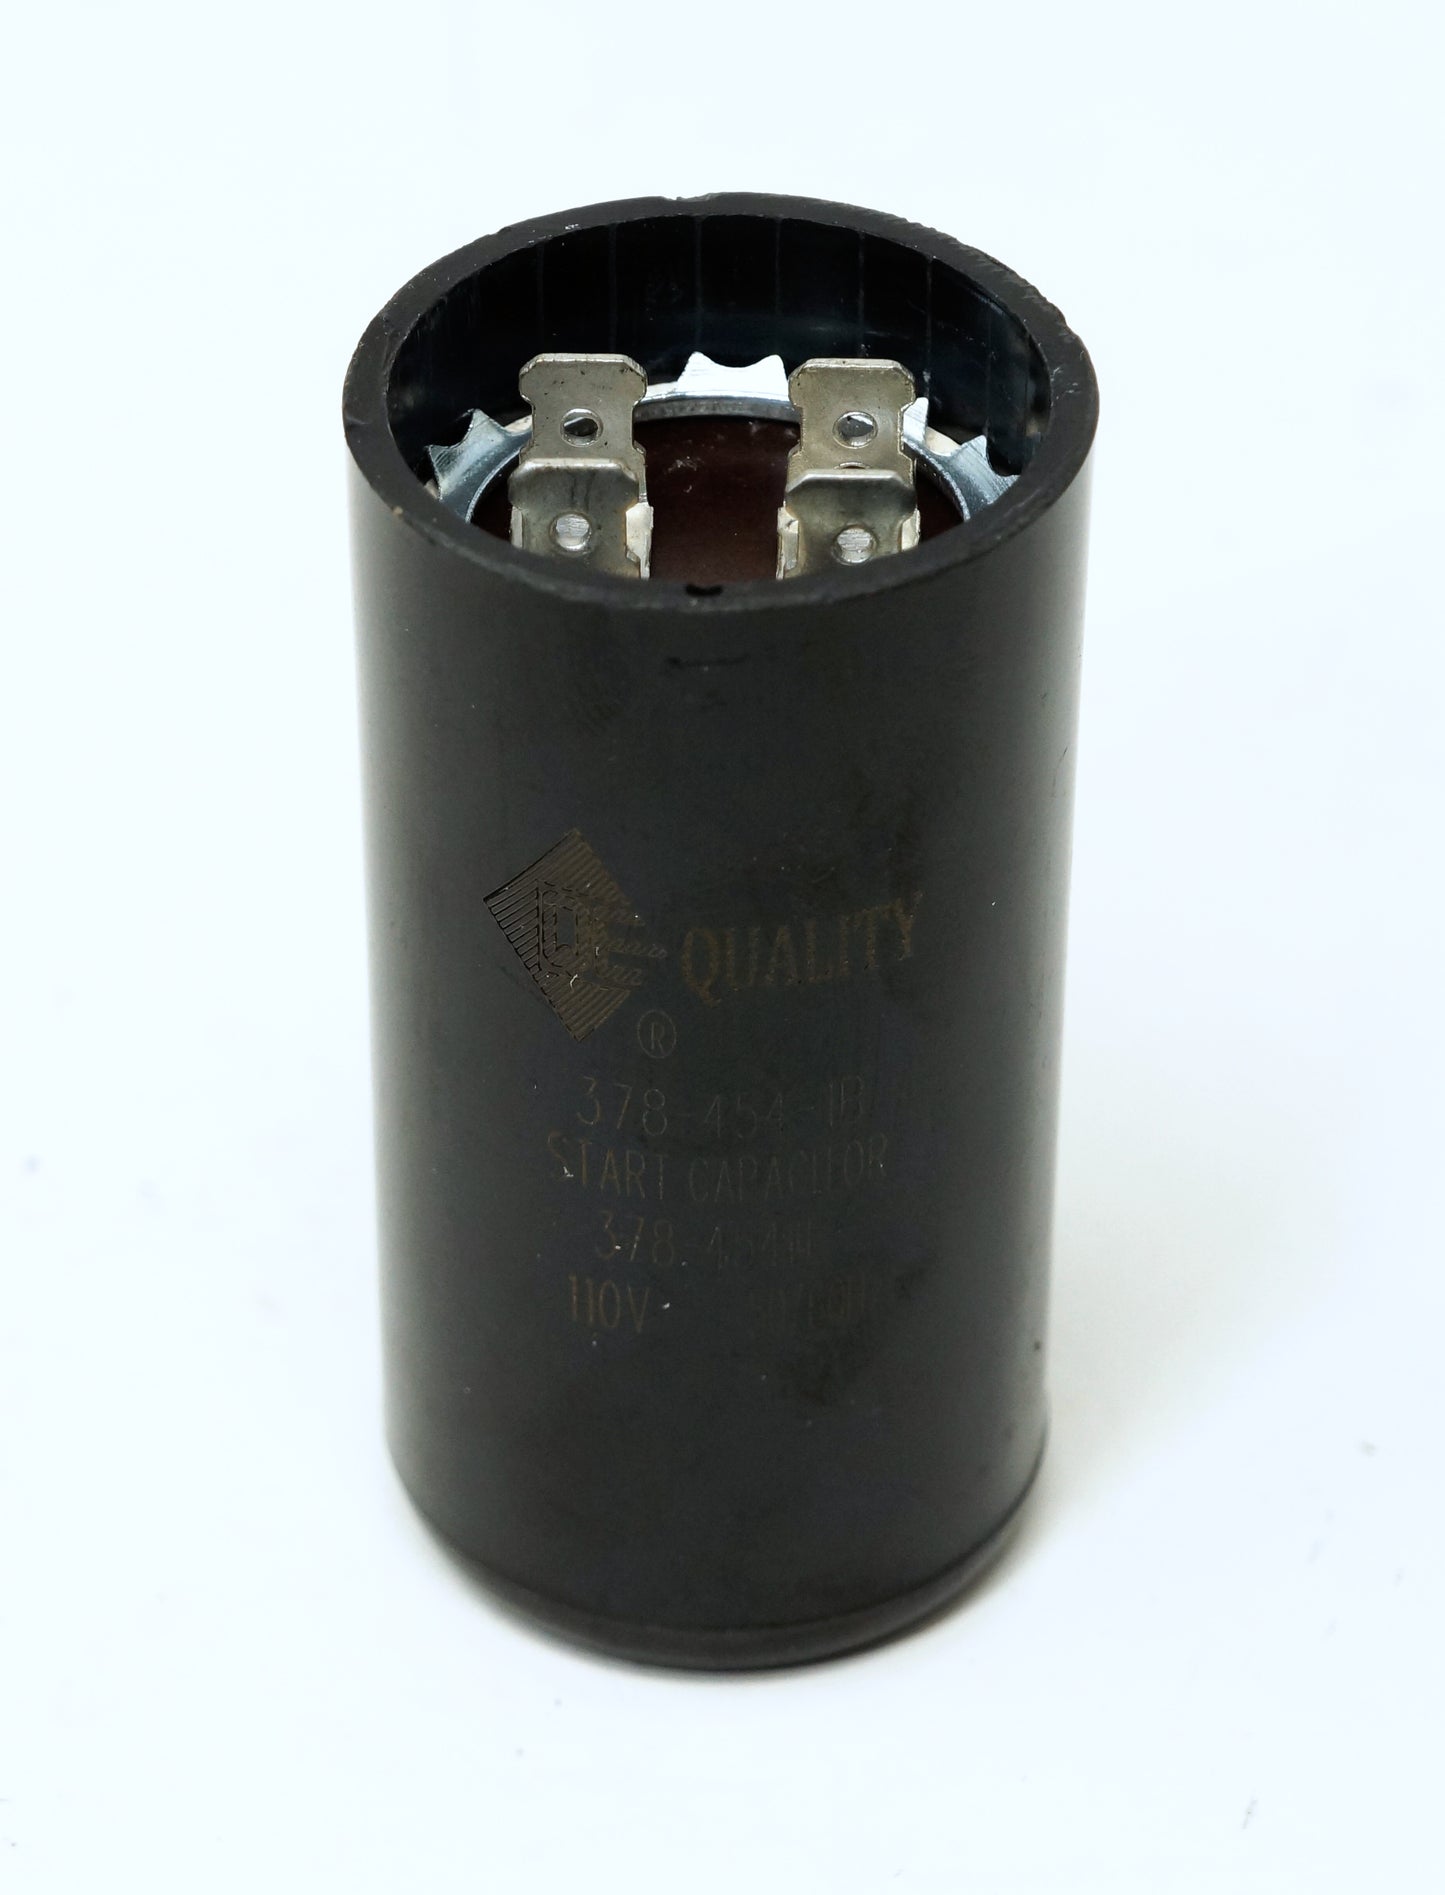 QE Quality Start Capacitor 378-454 MFD 110 VAC